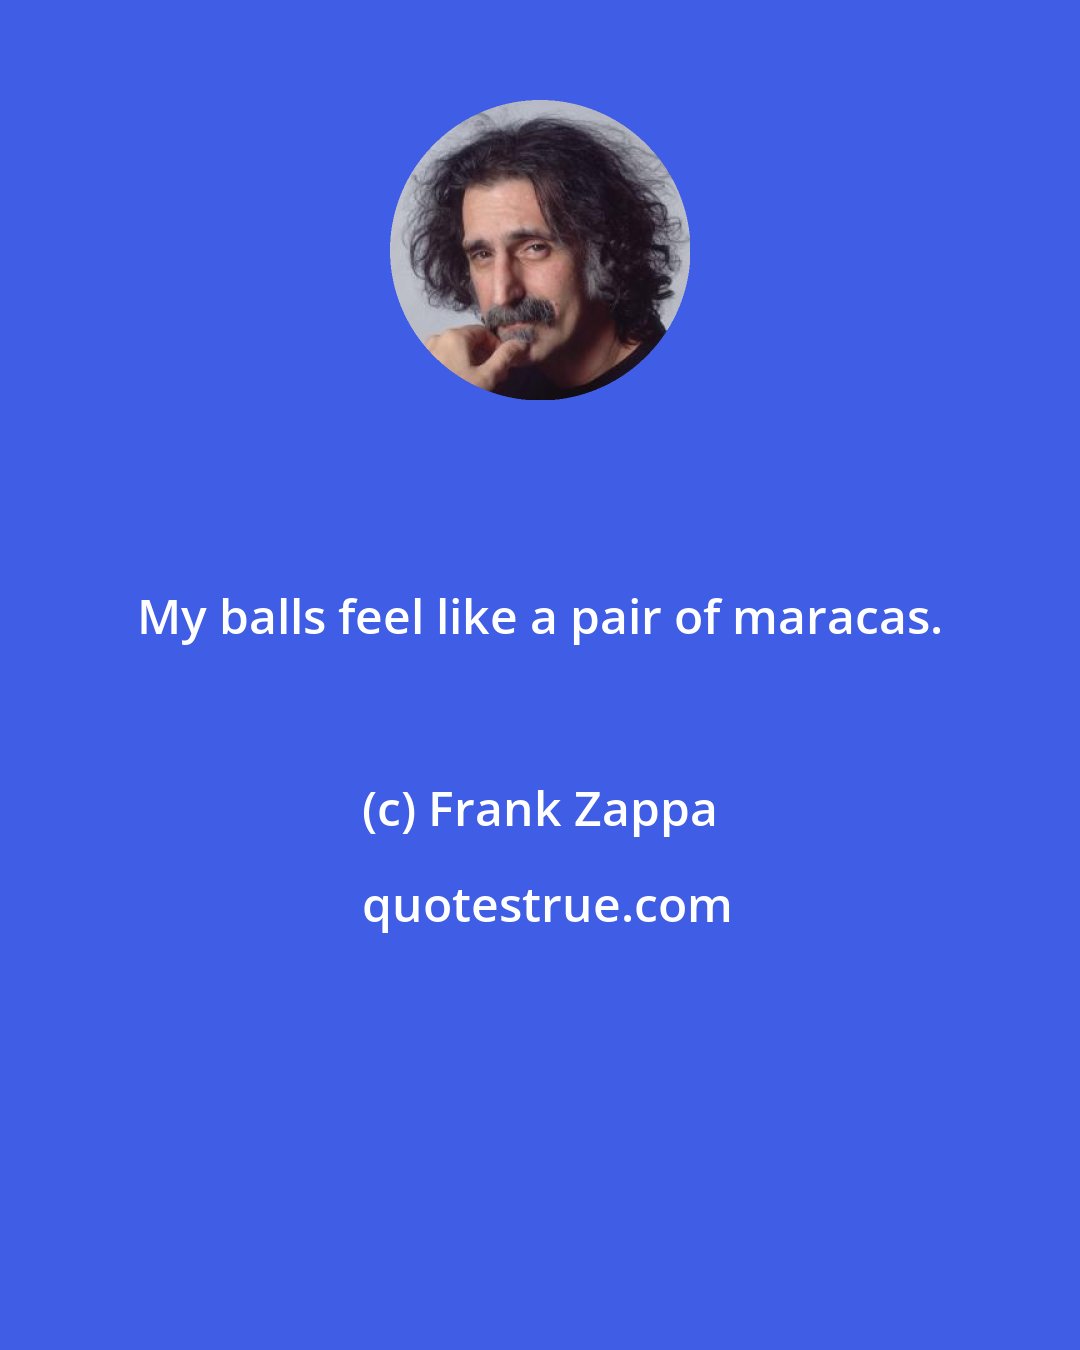 Frank Zappa: My balls feel like a pair of maracas.